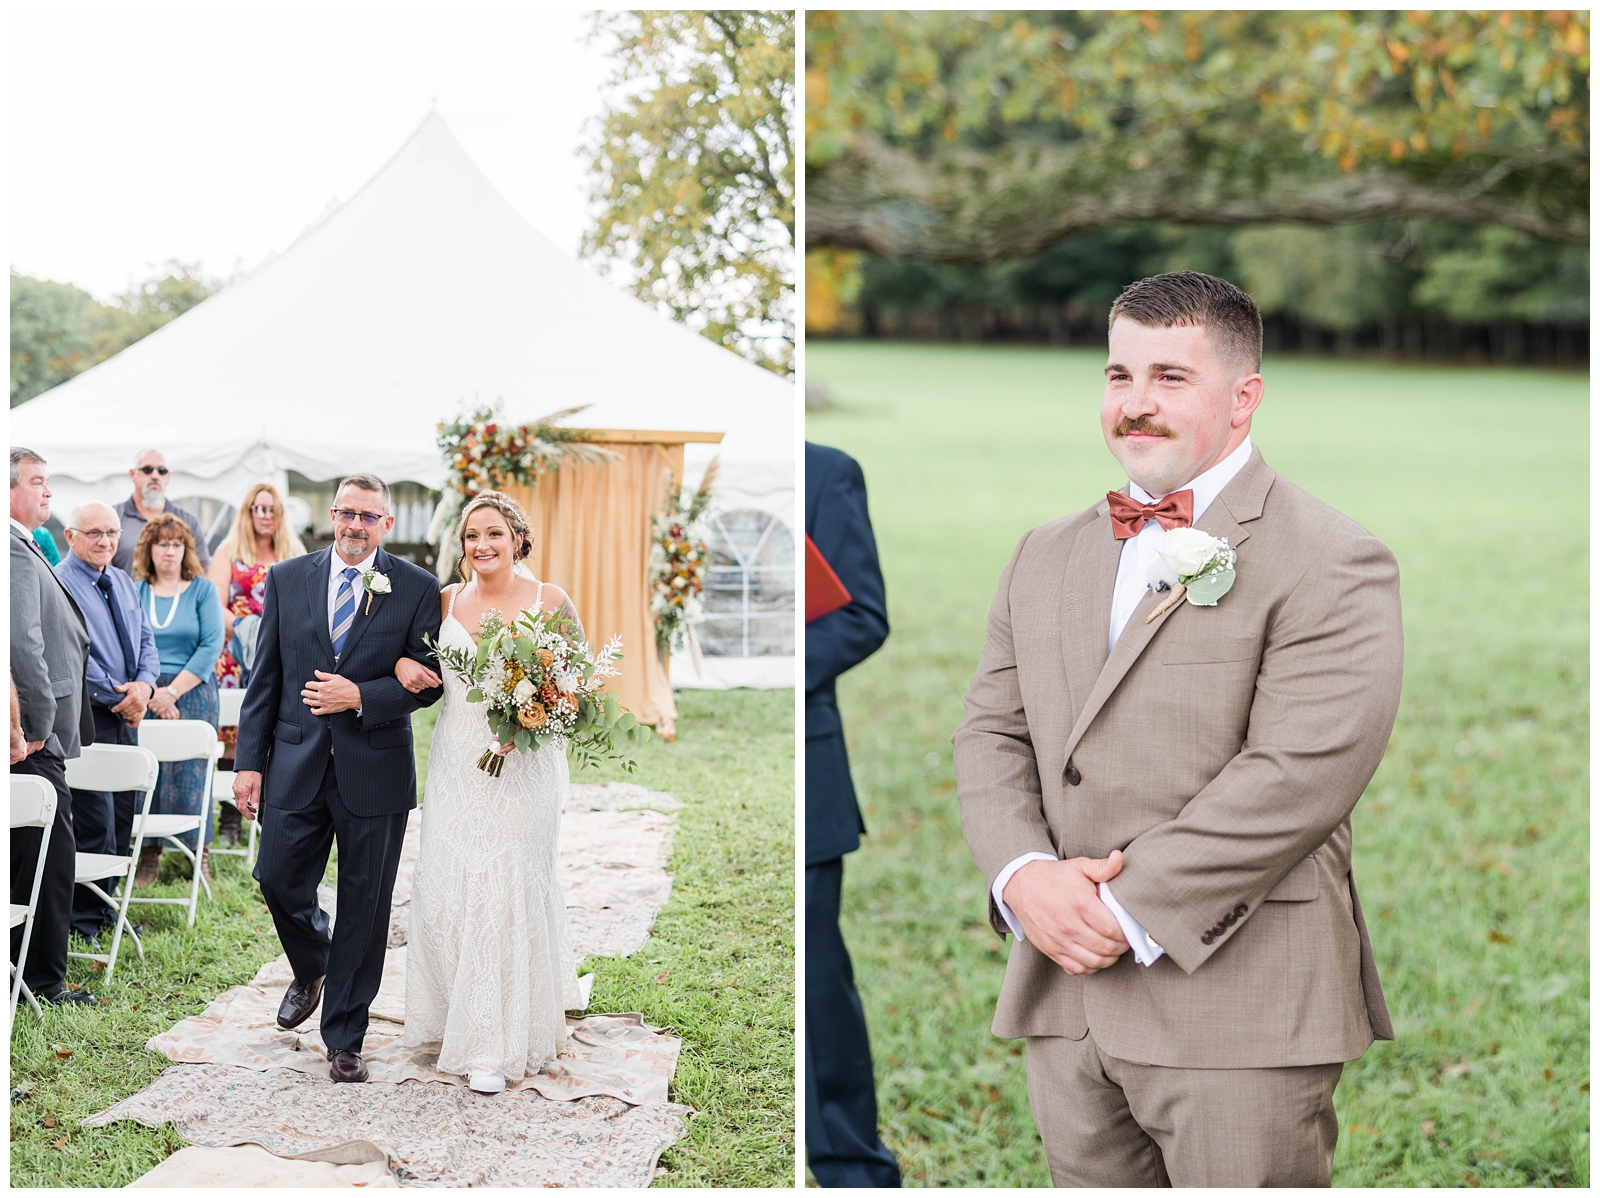 Michigan Fall Wedding at a Private Property